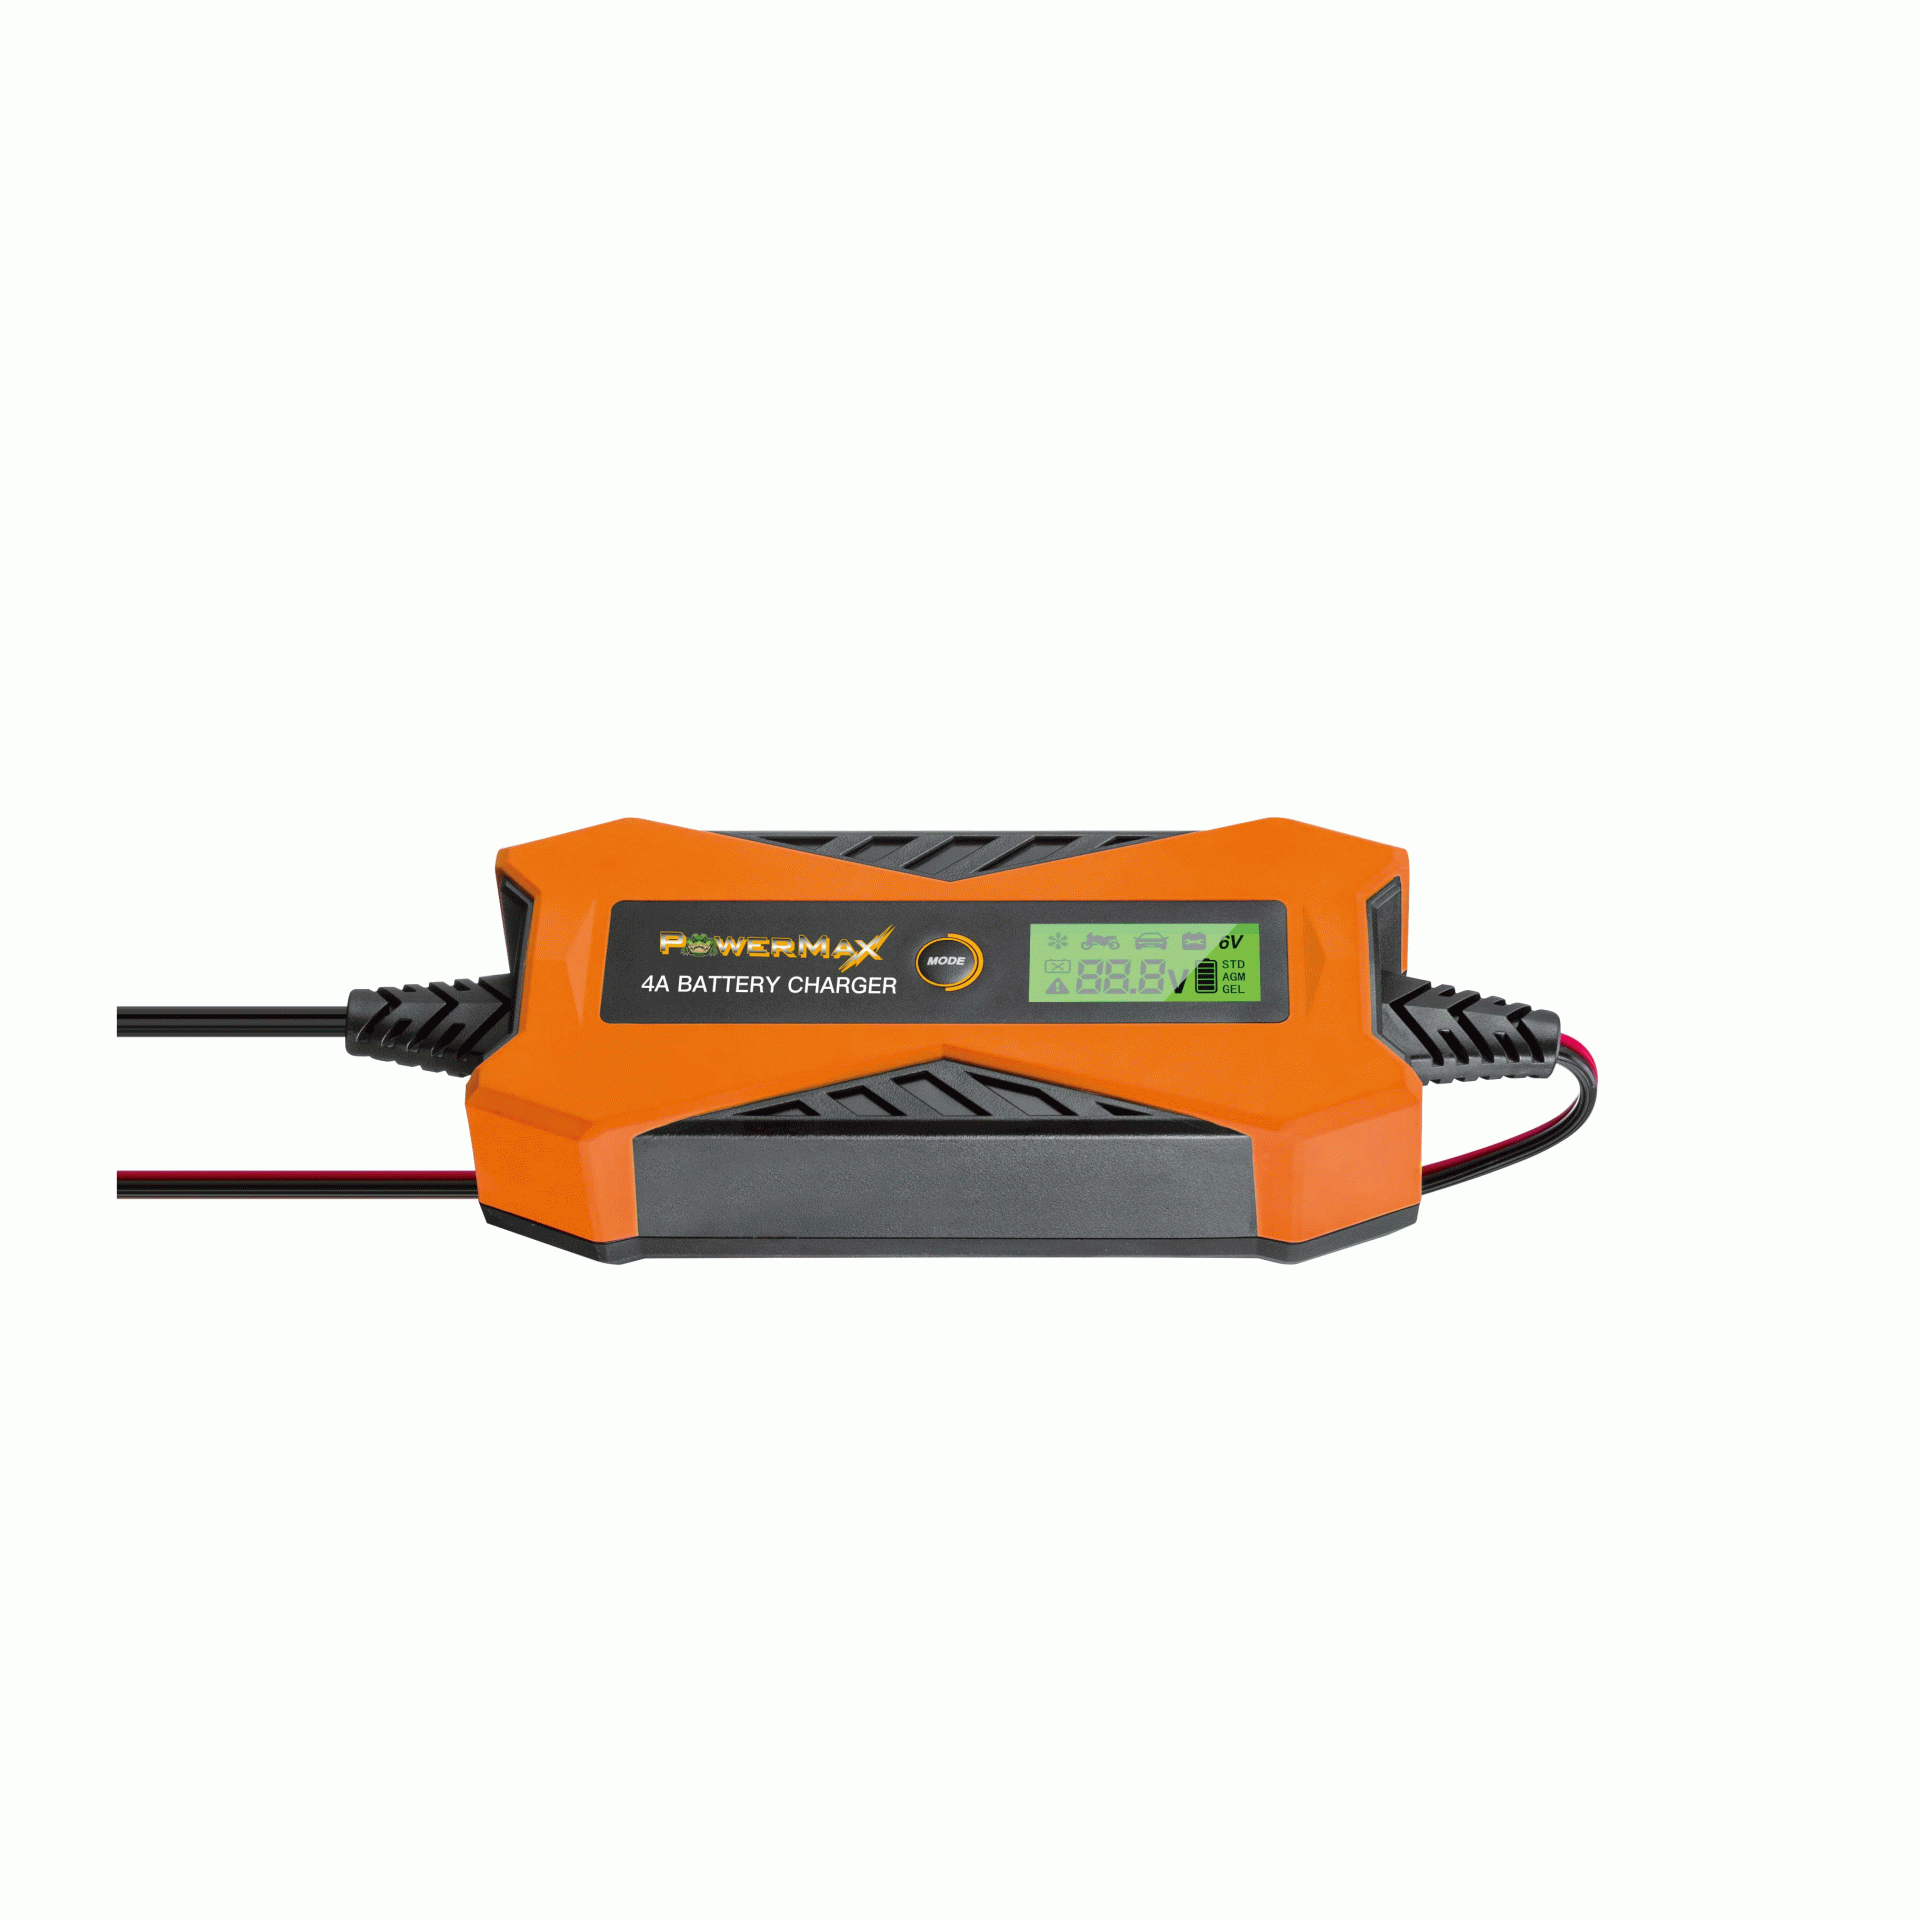 POWERMAX CONVERTERS | PMMC-04 | Smart Battery Charger - 4 Amp